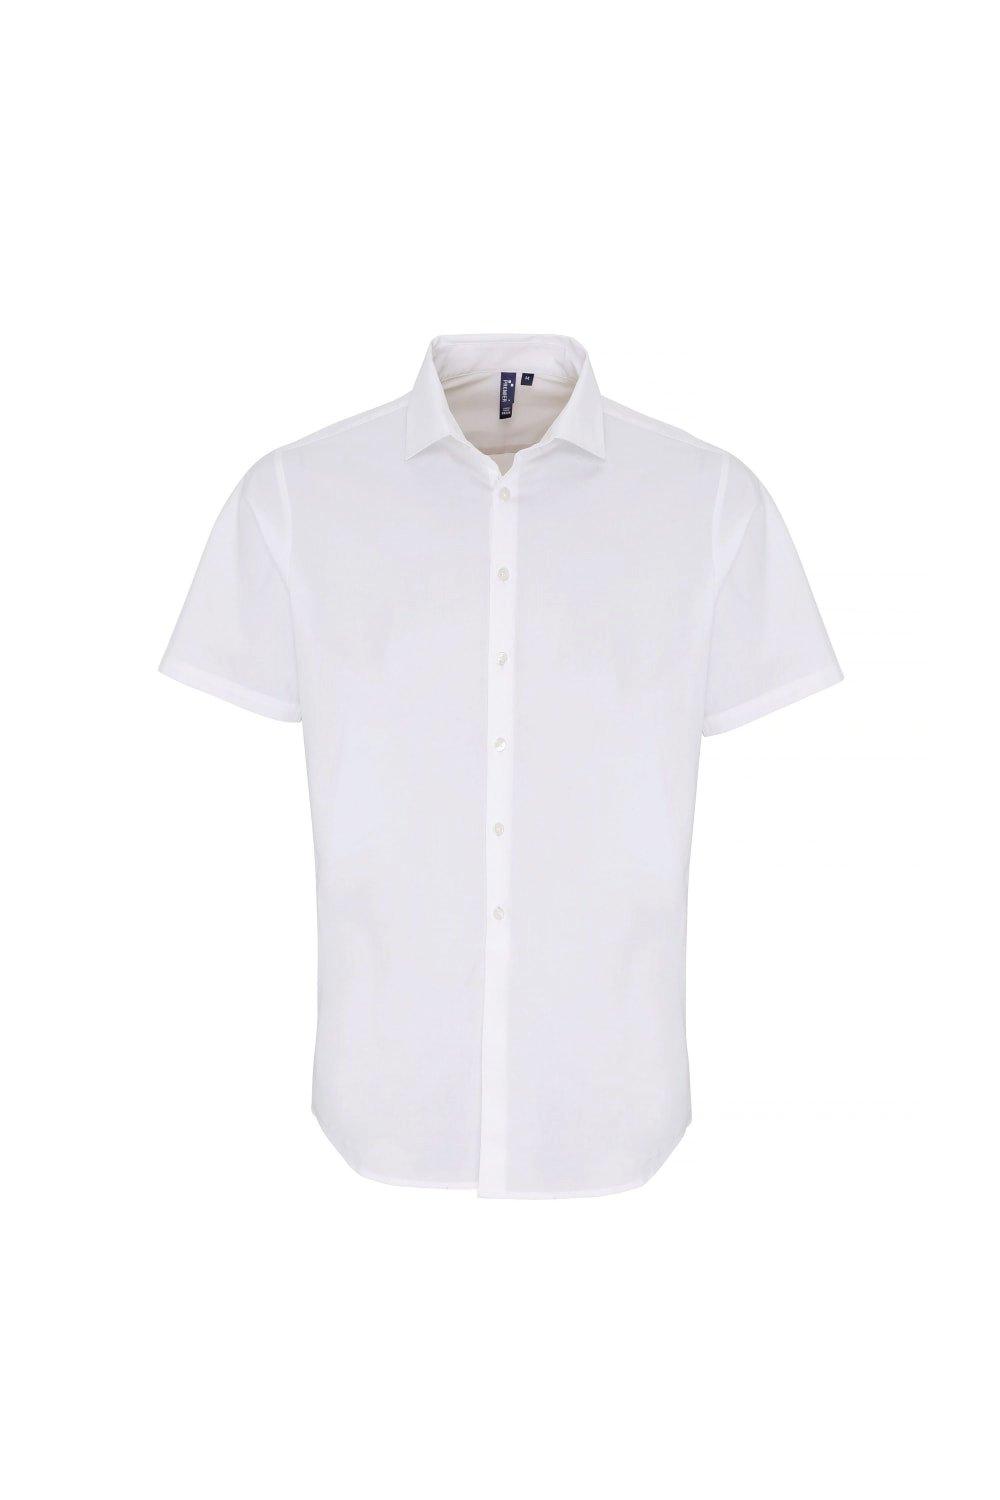 цена Рубашка из поплина стрейч с короткими рукавами Premier, белый